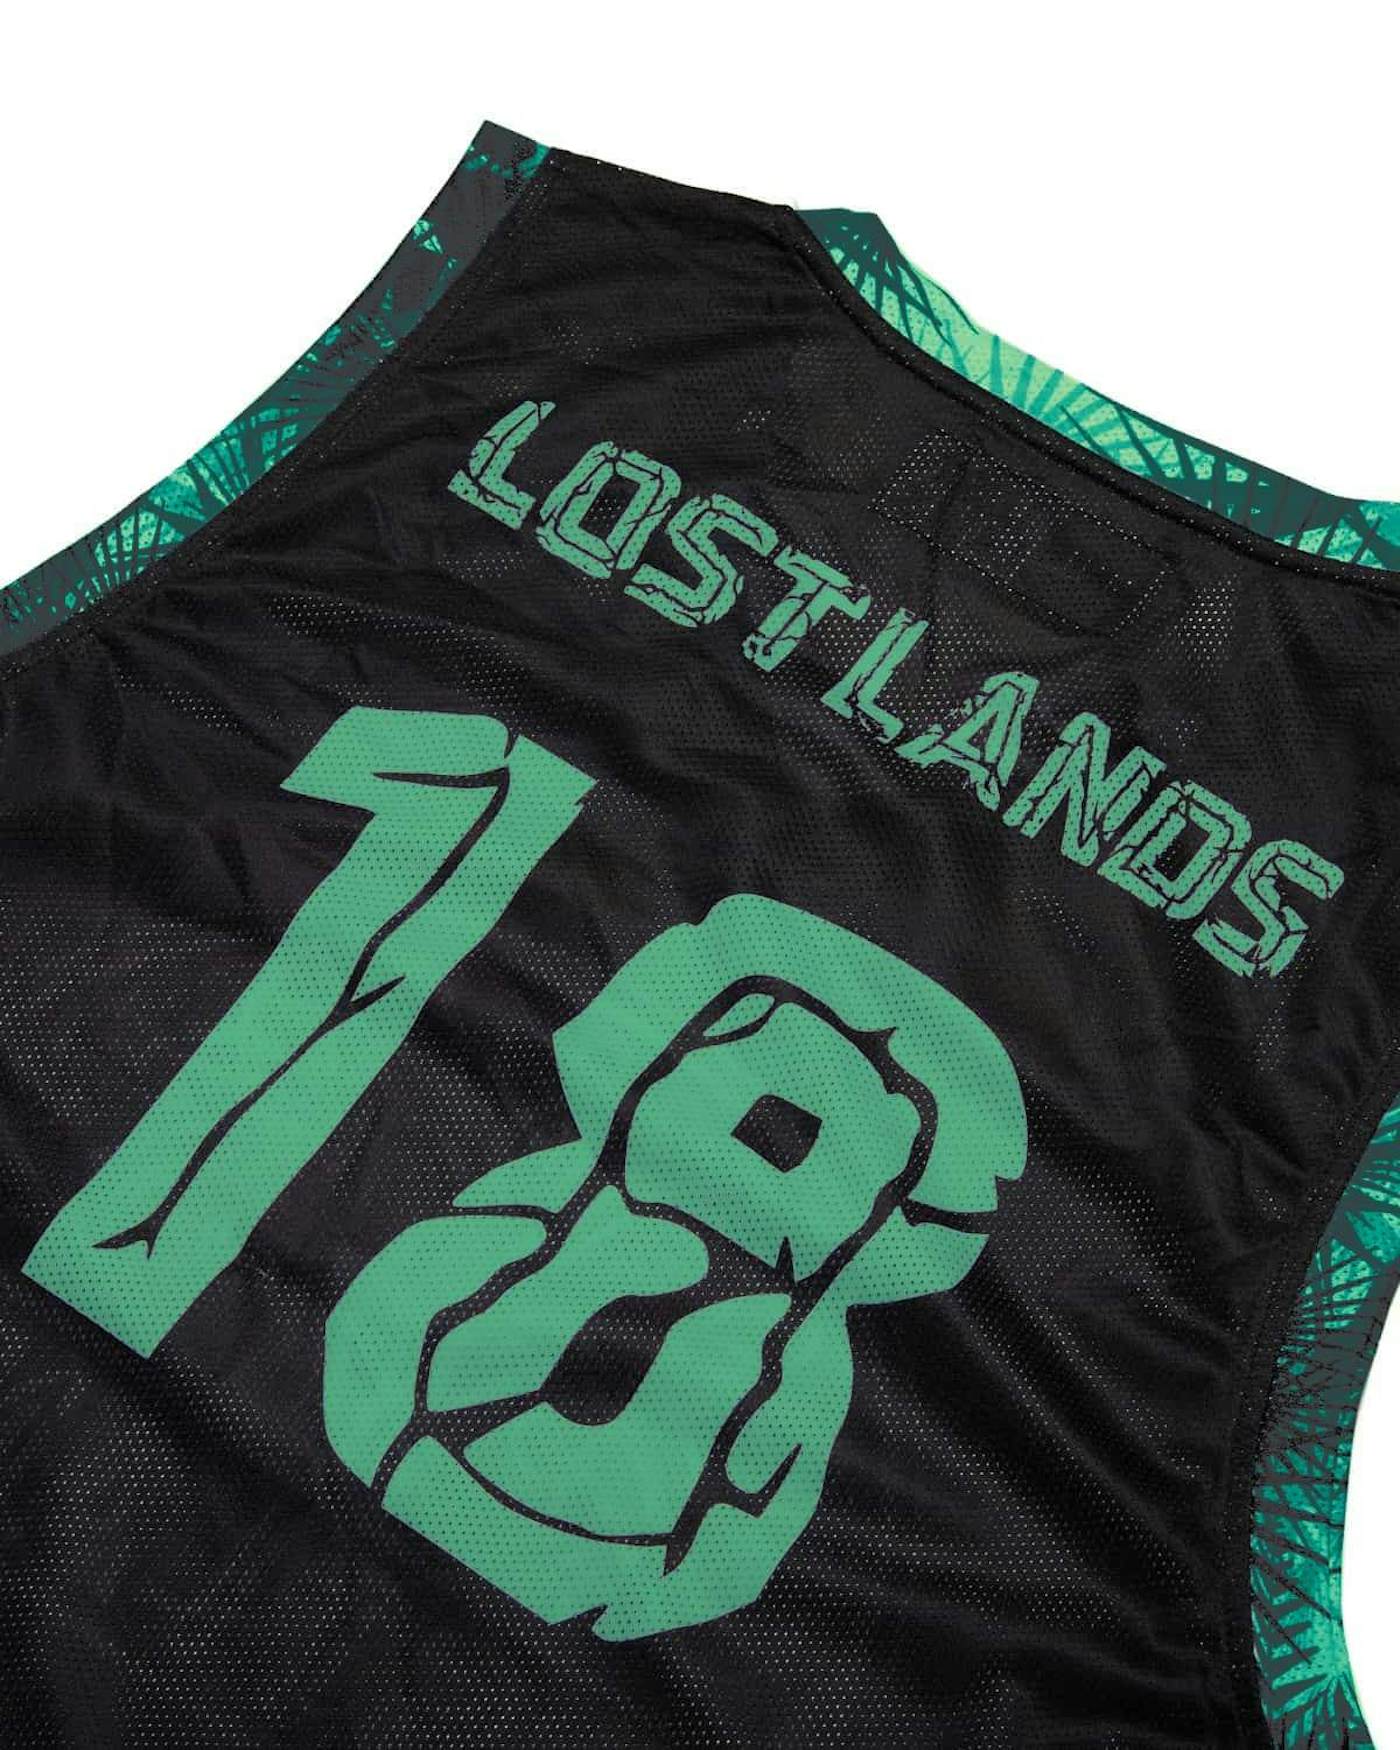 Lost Lands 'Rex' Basketball Jersey (Green/Black)